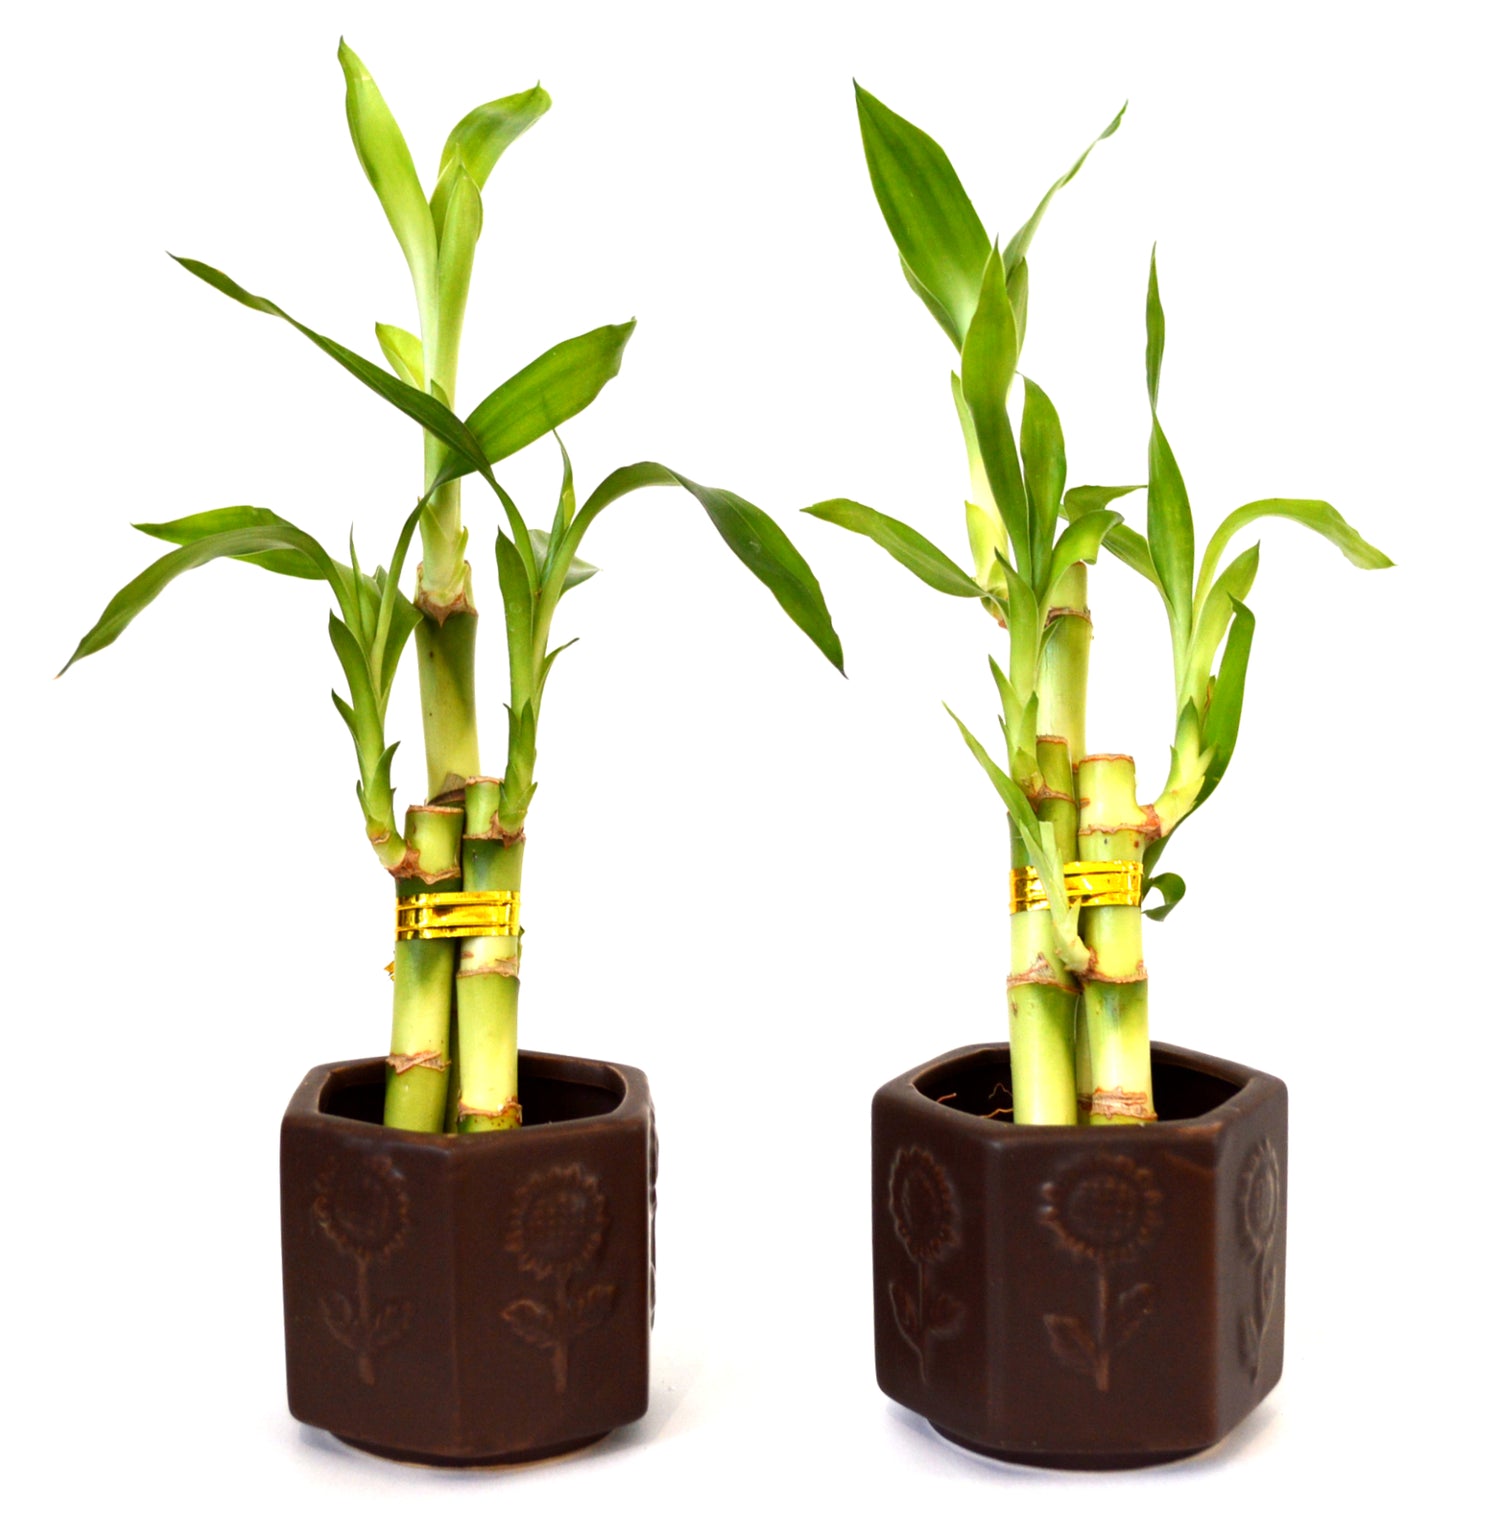 9GreenBox - Live 3 Style Party Set of 2 Bamboo Plant Arrangement w/ Ceramic Vase - 9GreenBox